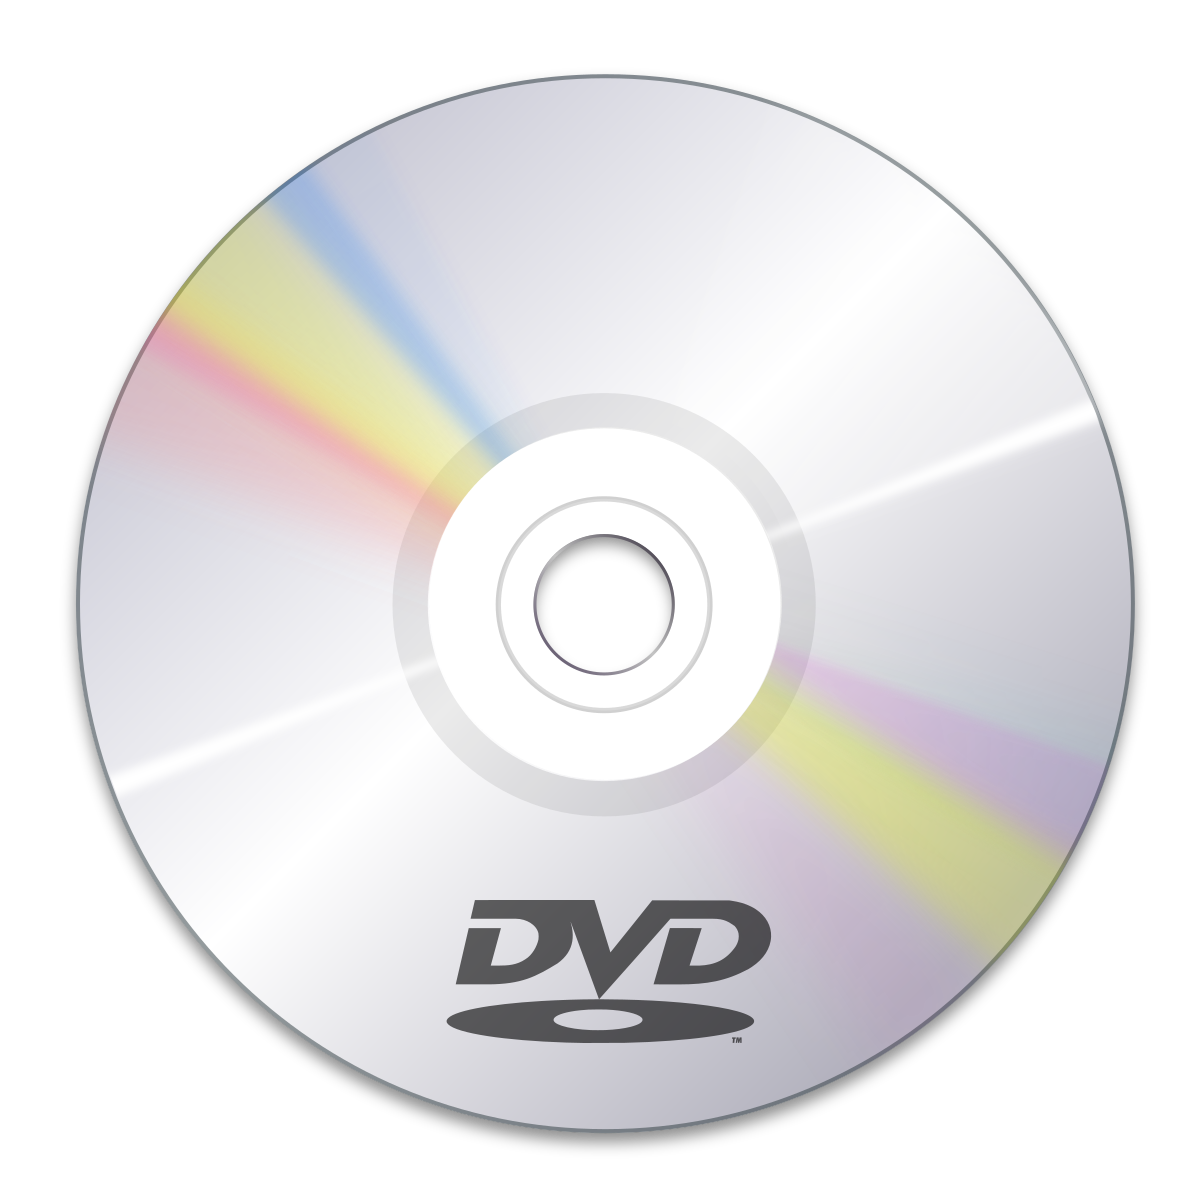 dvd | www.150.illinois.edu